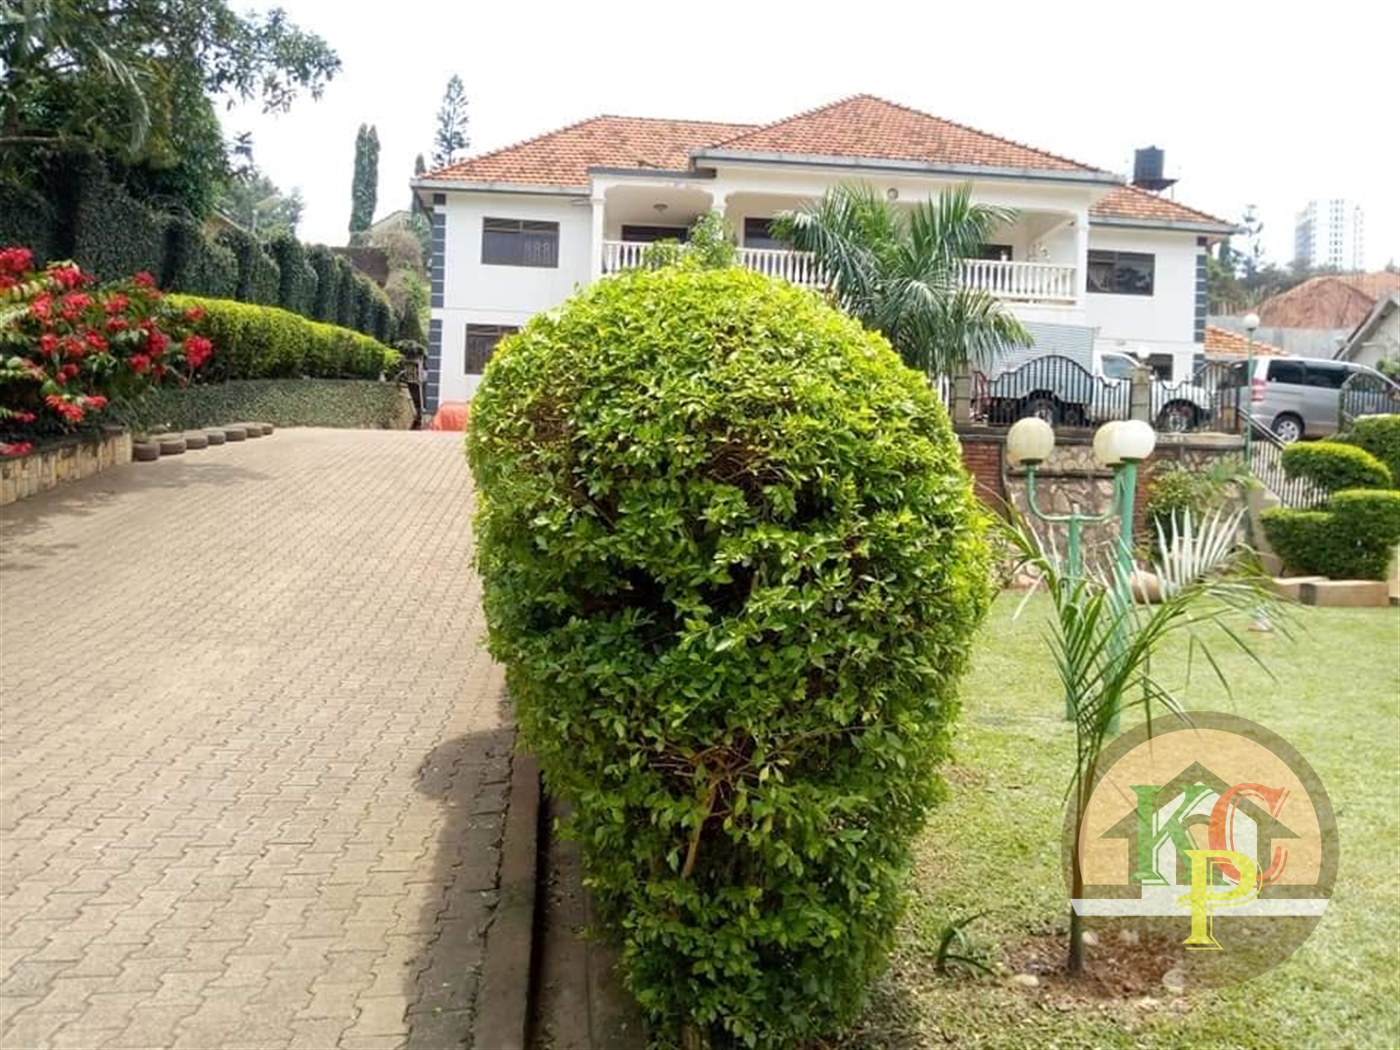 2 Bedroom House For Rent In Naguru Kampala Uganda Code 09 10 22